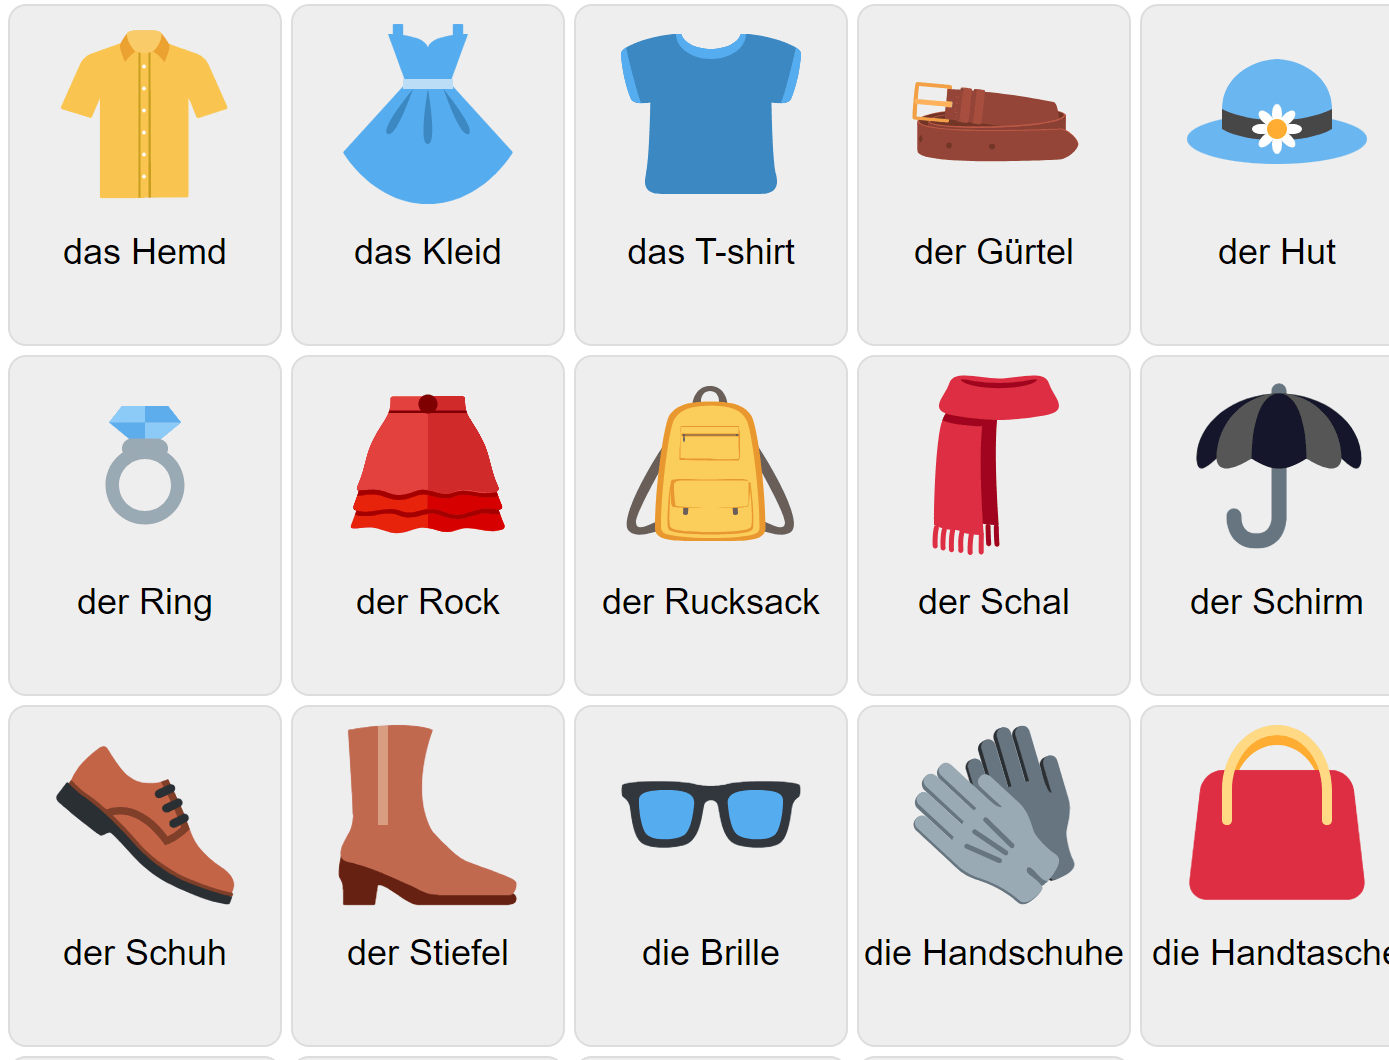 Одежда на немецком языке